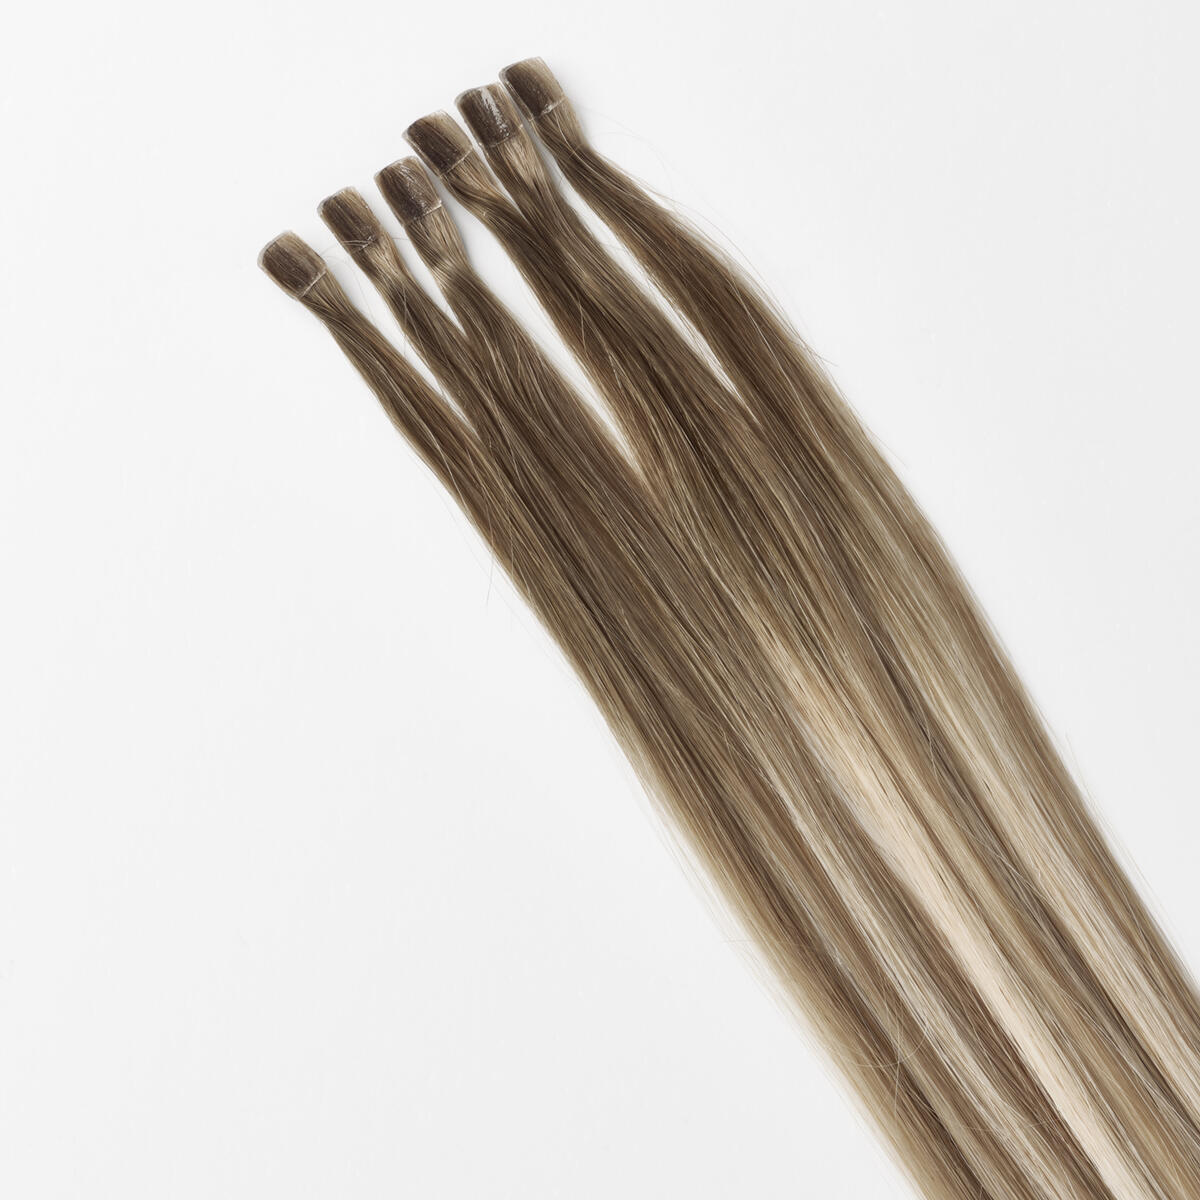 Premium Keratiini Sinettipidennykset - 20 pieces B2.6/10.7 Dark Ashy Blonde Balayage 30 cm